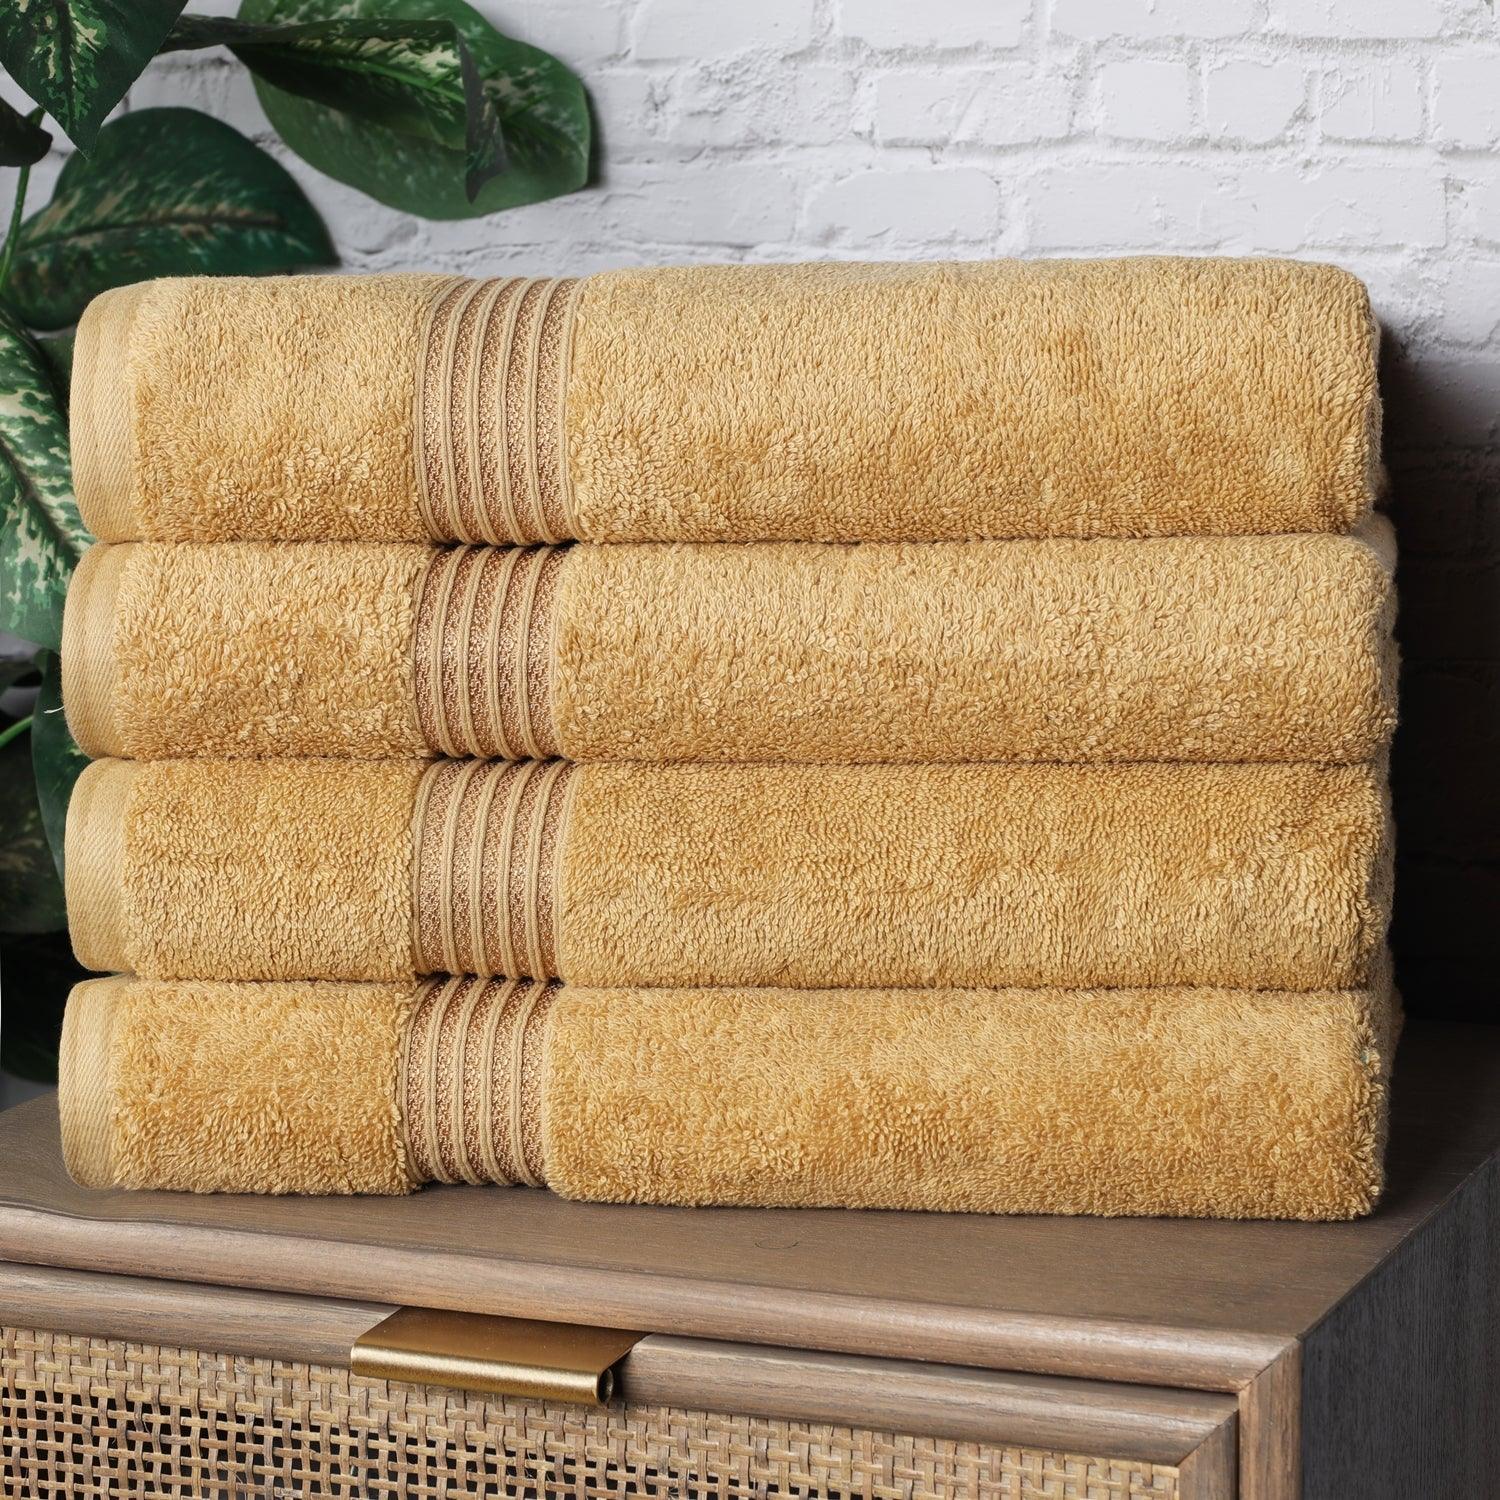 Egyptian Cotton 600 GSM, 4-Piece Bath Towel Set FredCo